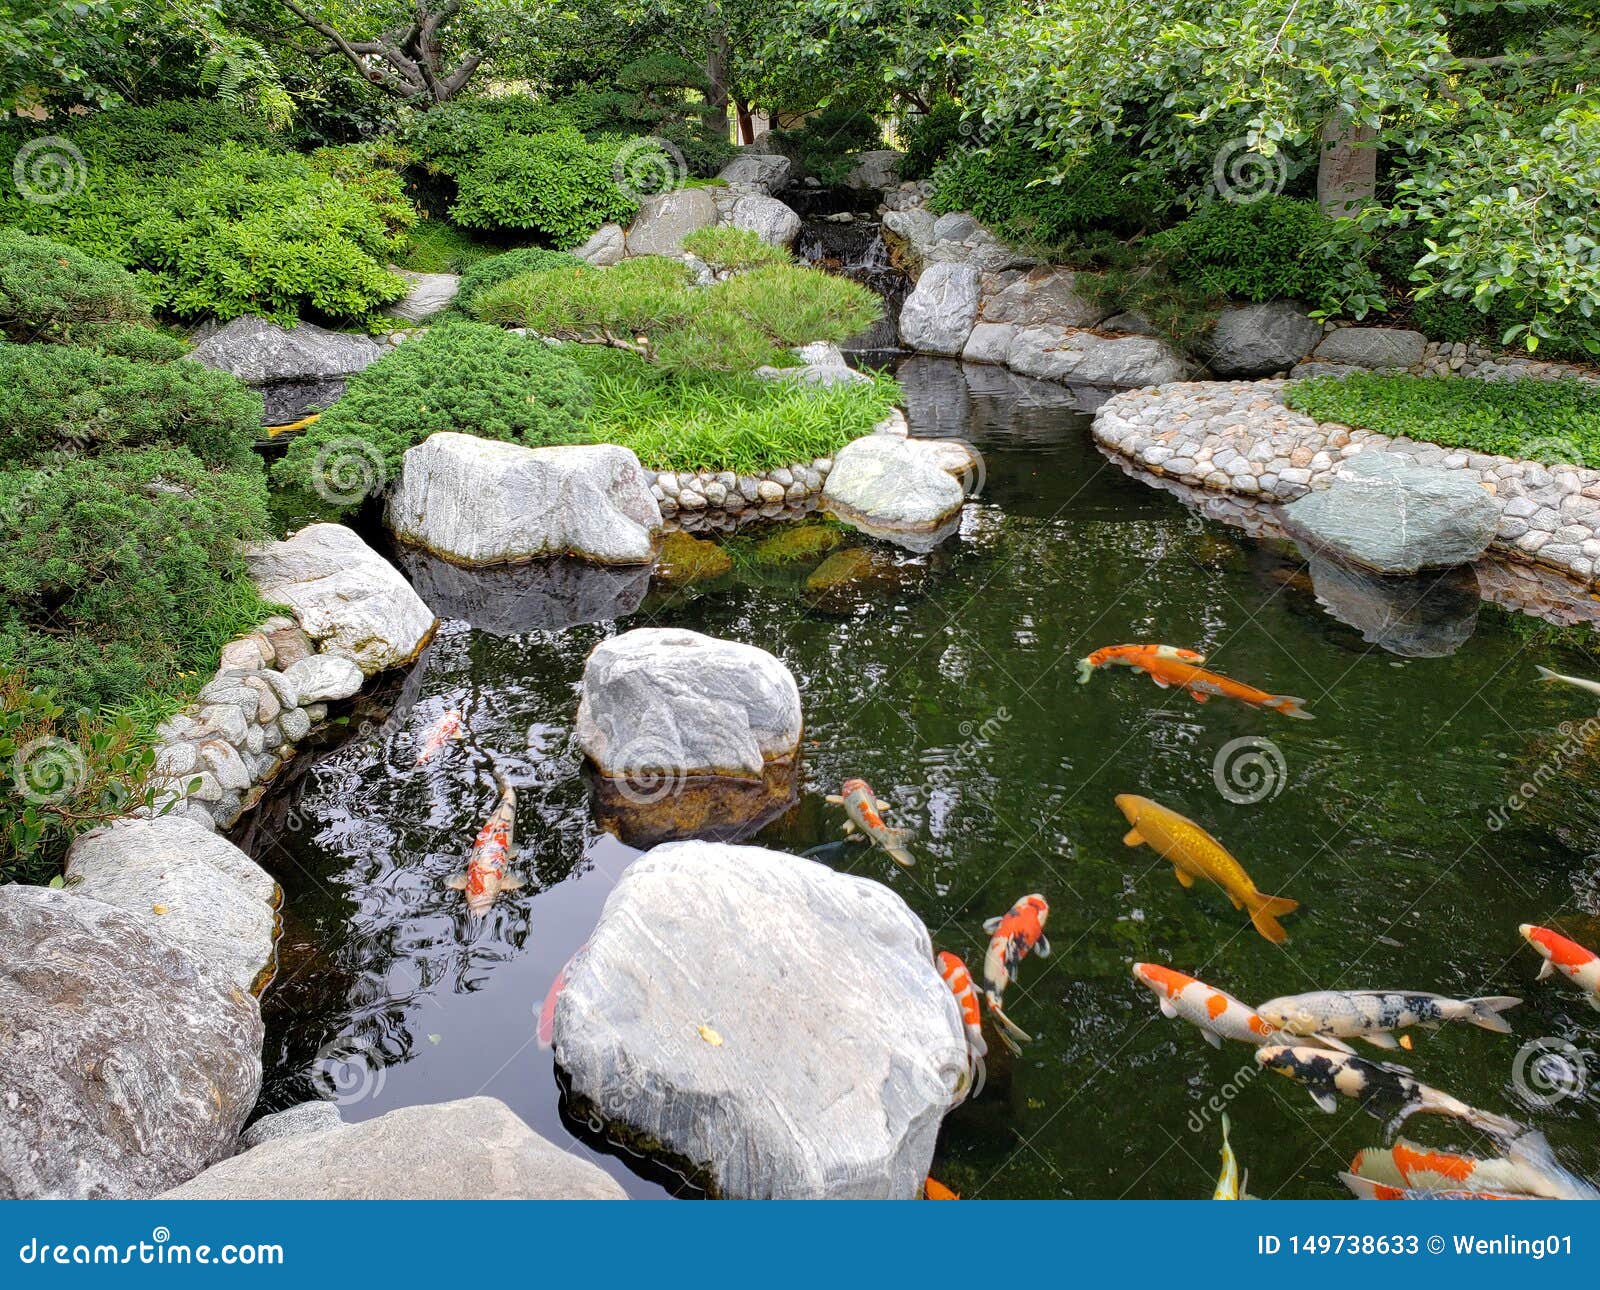 Koi Pond Design In Japanese Friendship Garden Balboa Park San